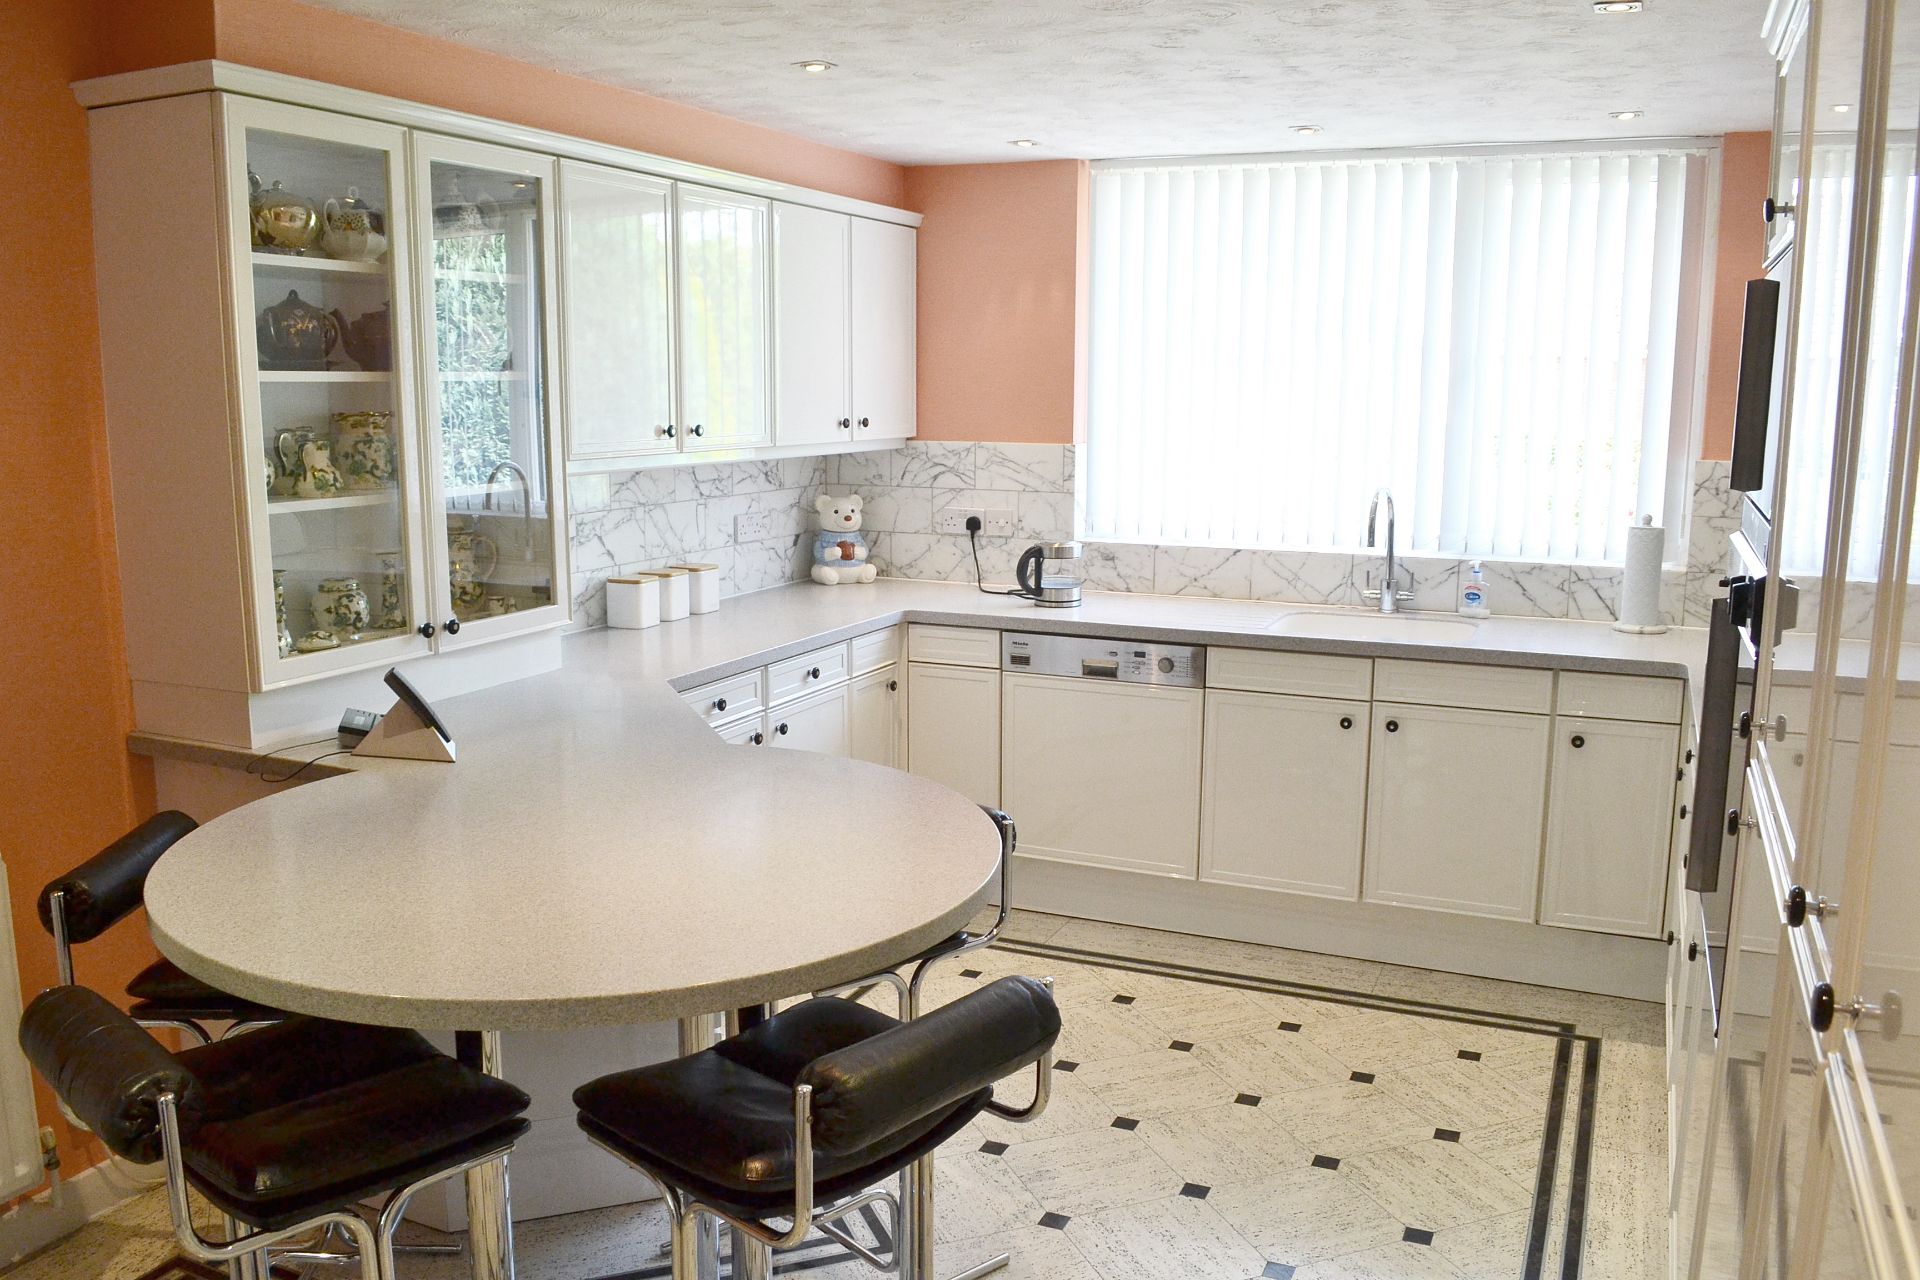 1 x Stunning Bespoke Siematic Gloss White Fitted Kitchen With Corian Worktops - NO VAT ON HAMMER